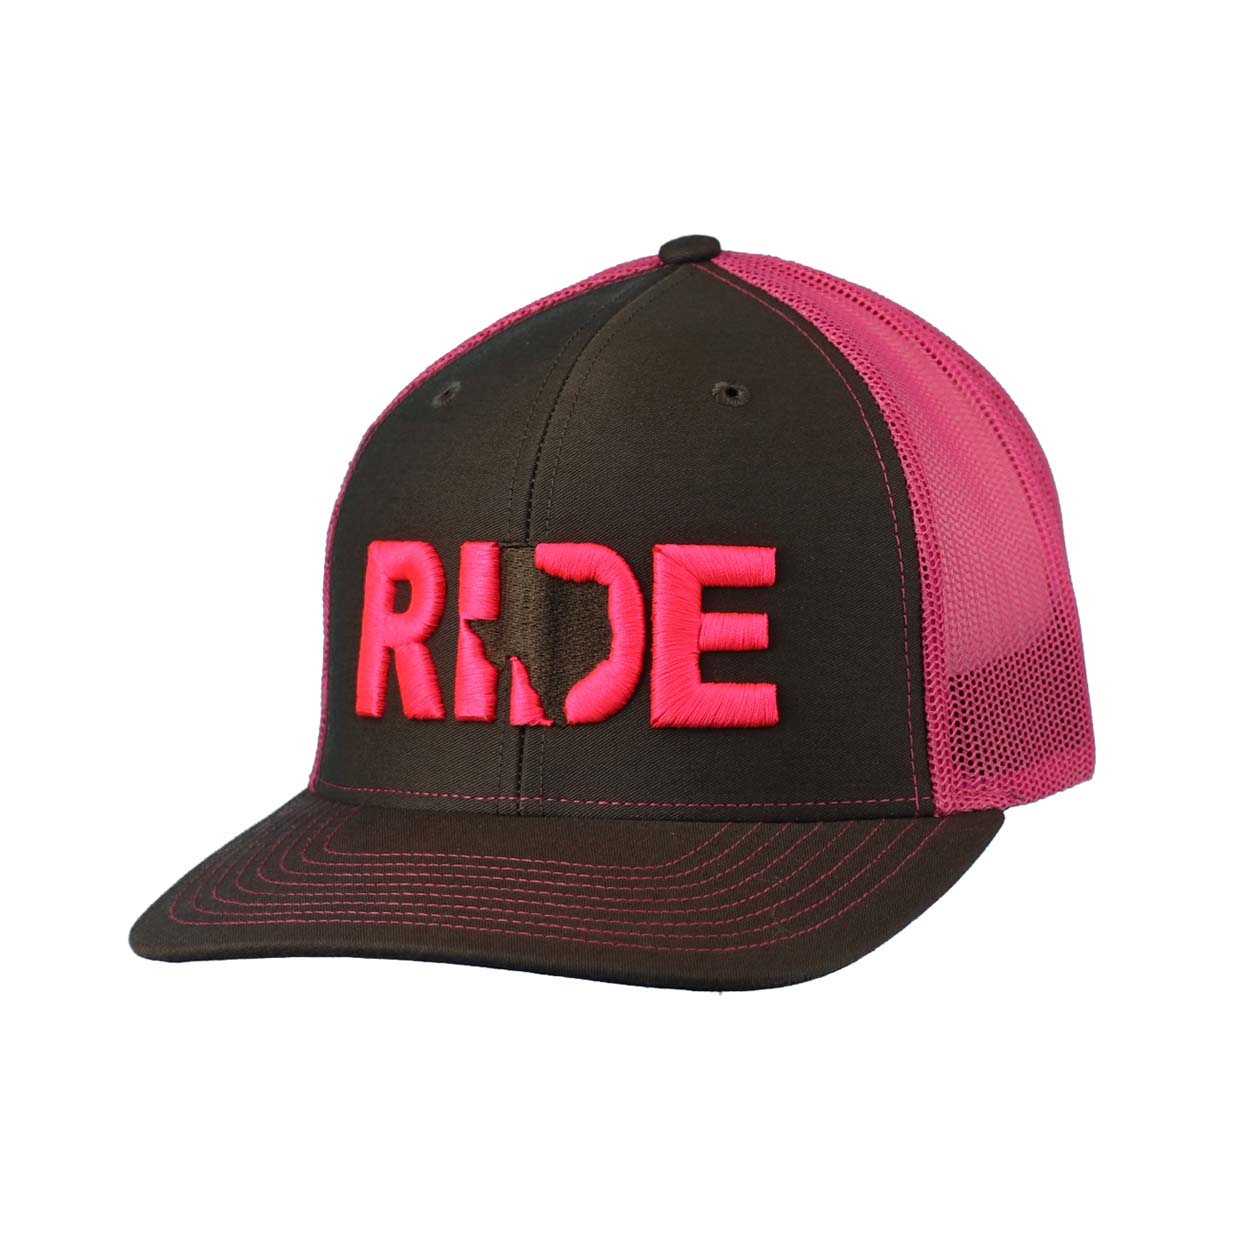 Ride Texas Classic Embroidered Snapback Trucker Hat Gray/Fuschia